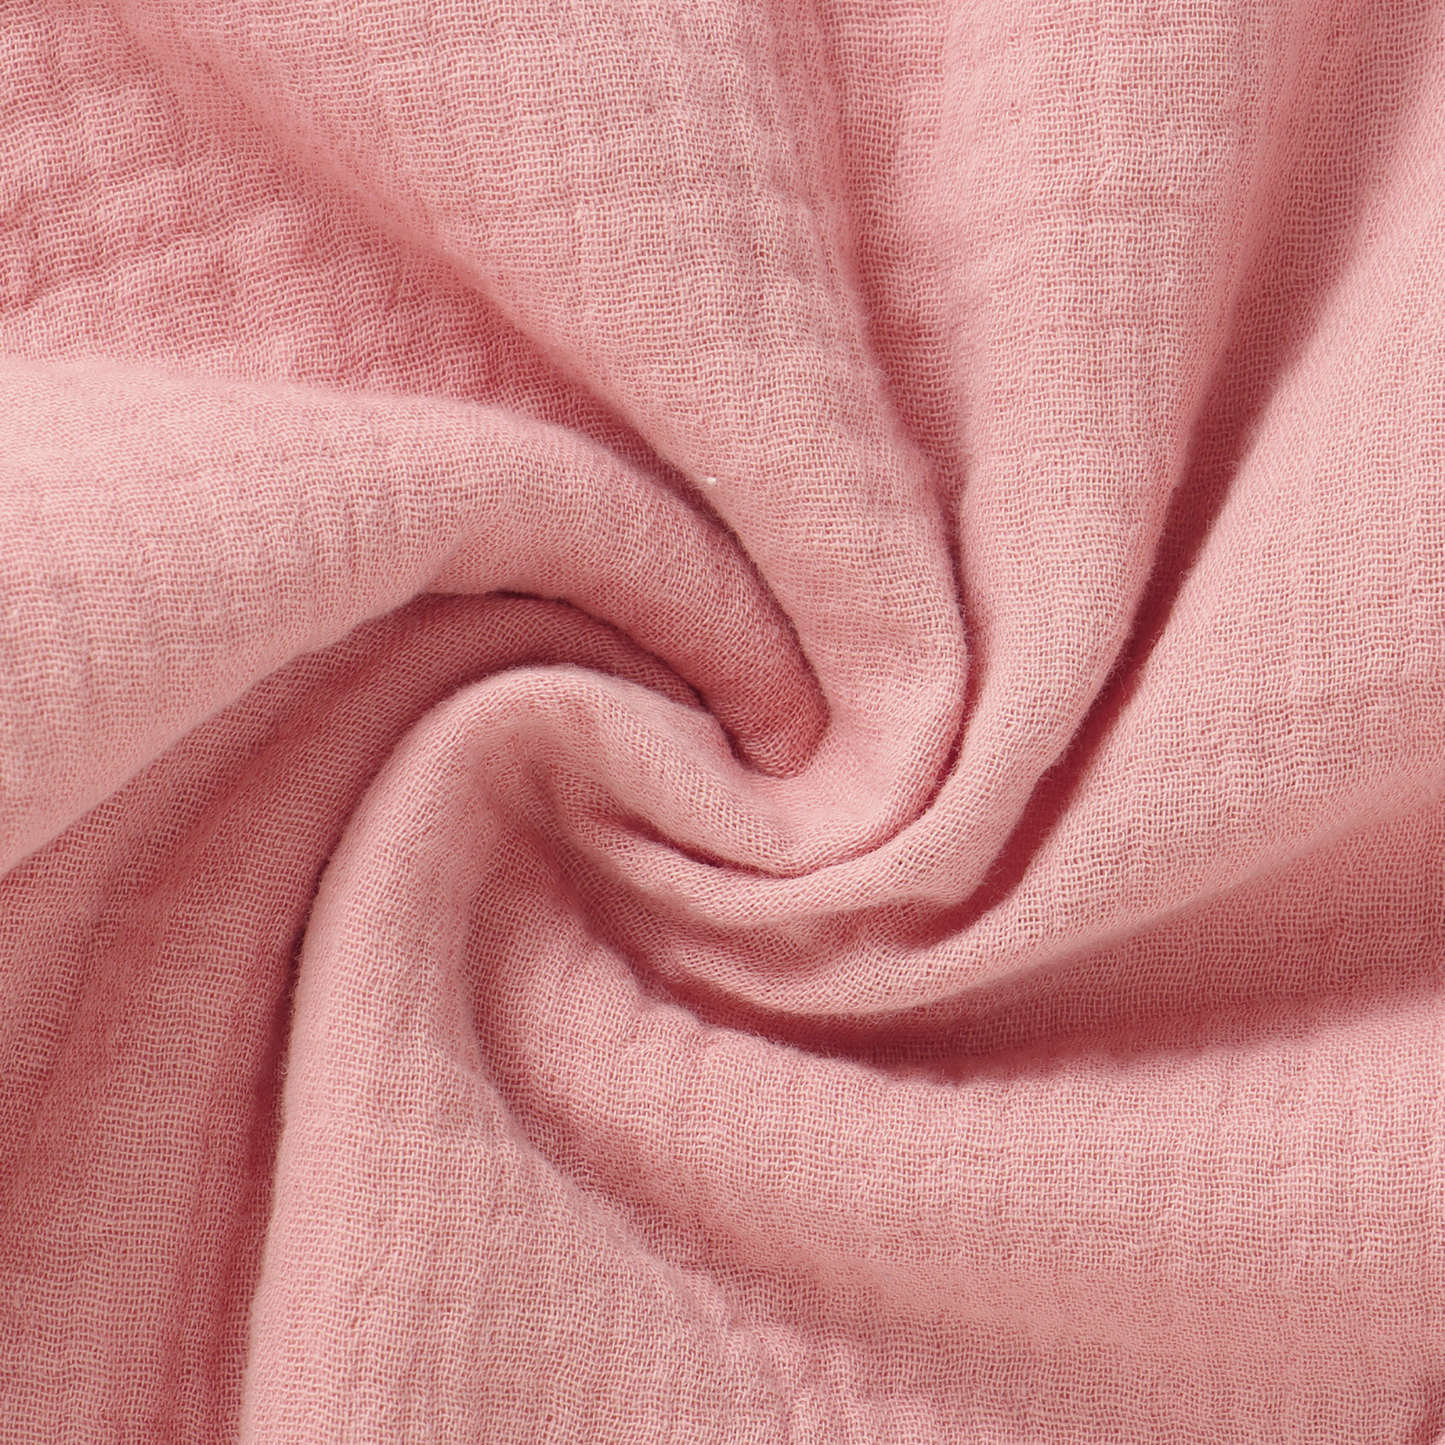 Hooded Beach Towel  - Coral Pink (2-6 Years)